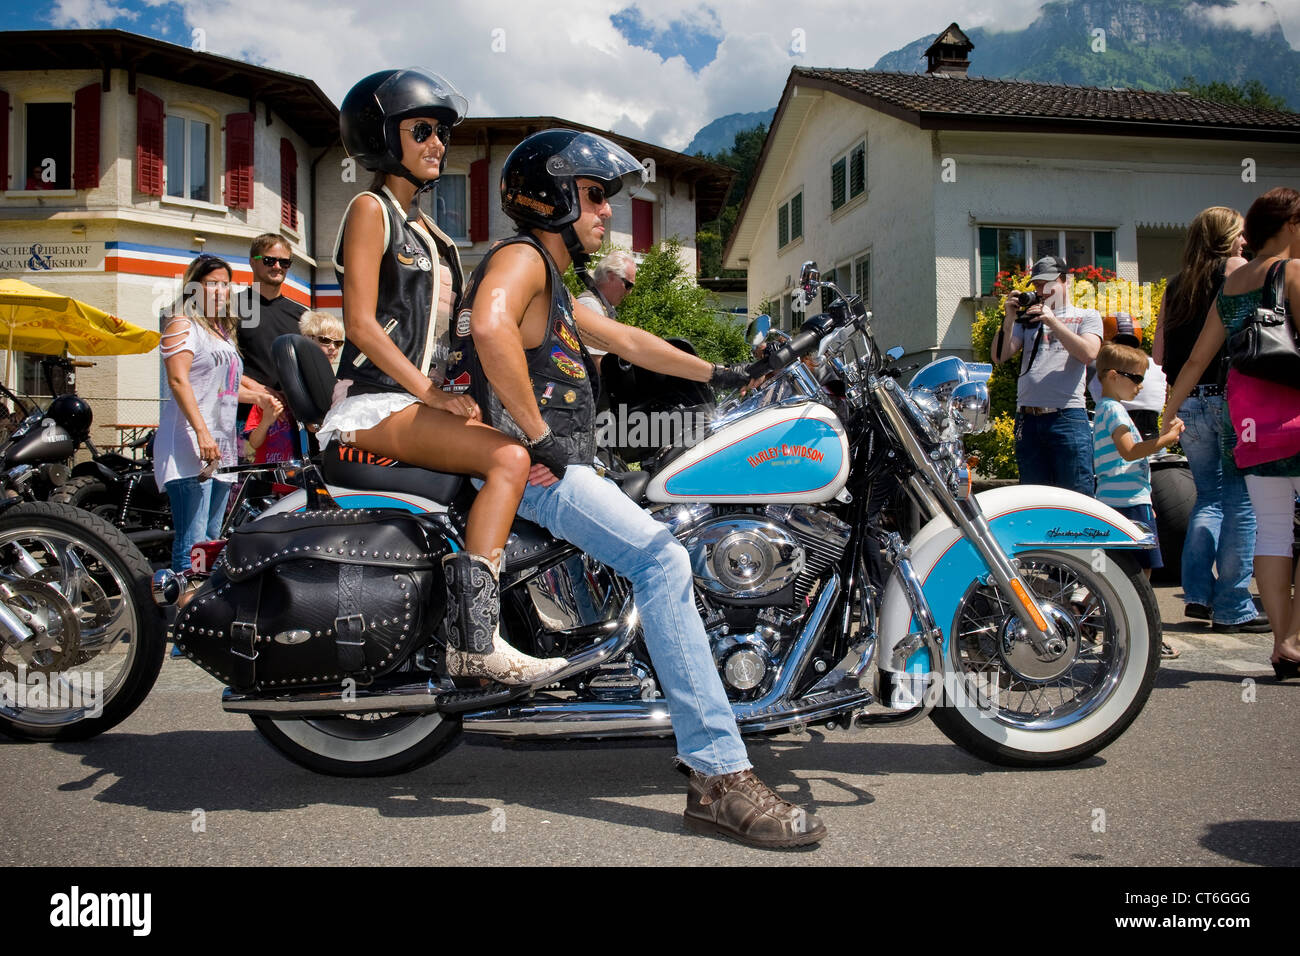 Schweiz, Brunnen, Harley Davidson festival Stockfotografie - Alamy